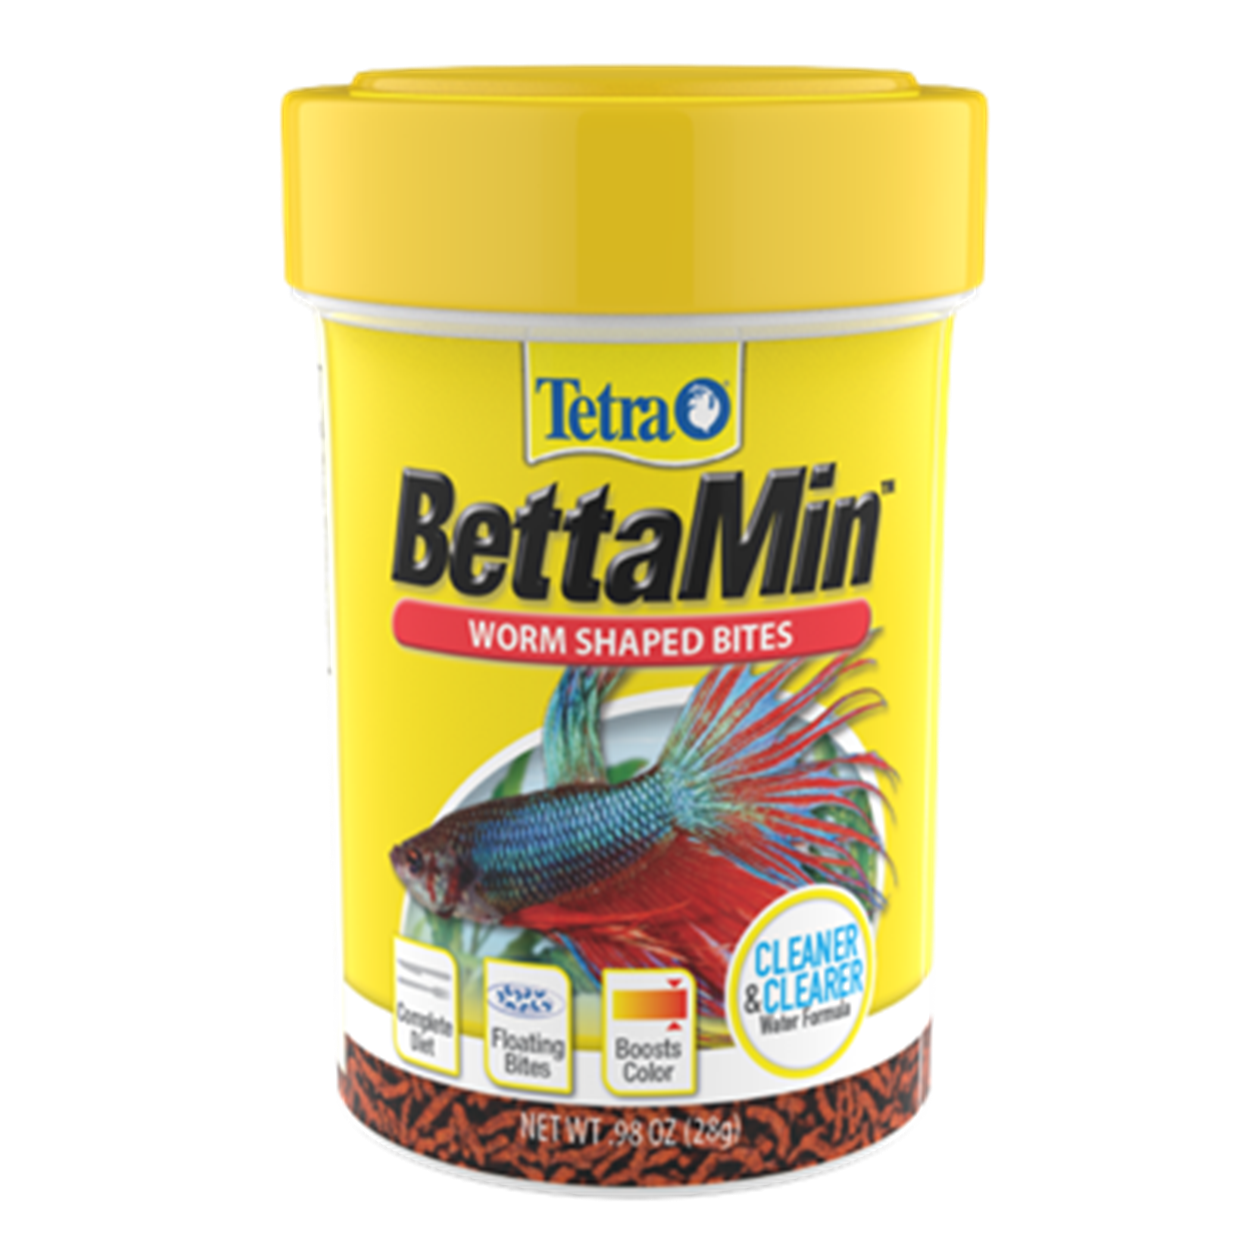 Tetra® BettaMin® Worm Shaped Bites